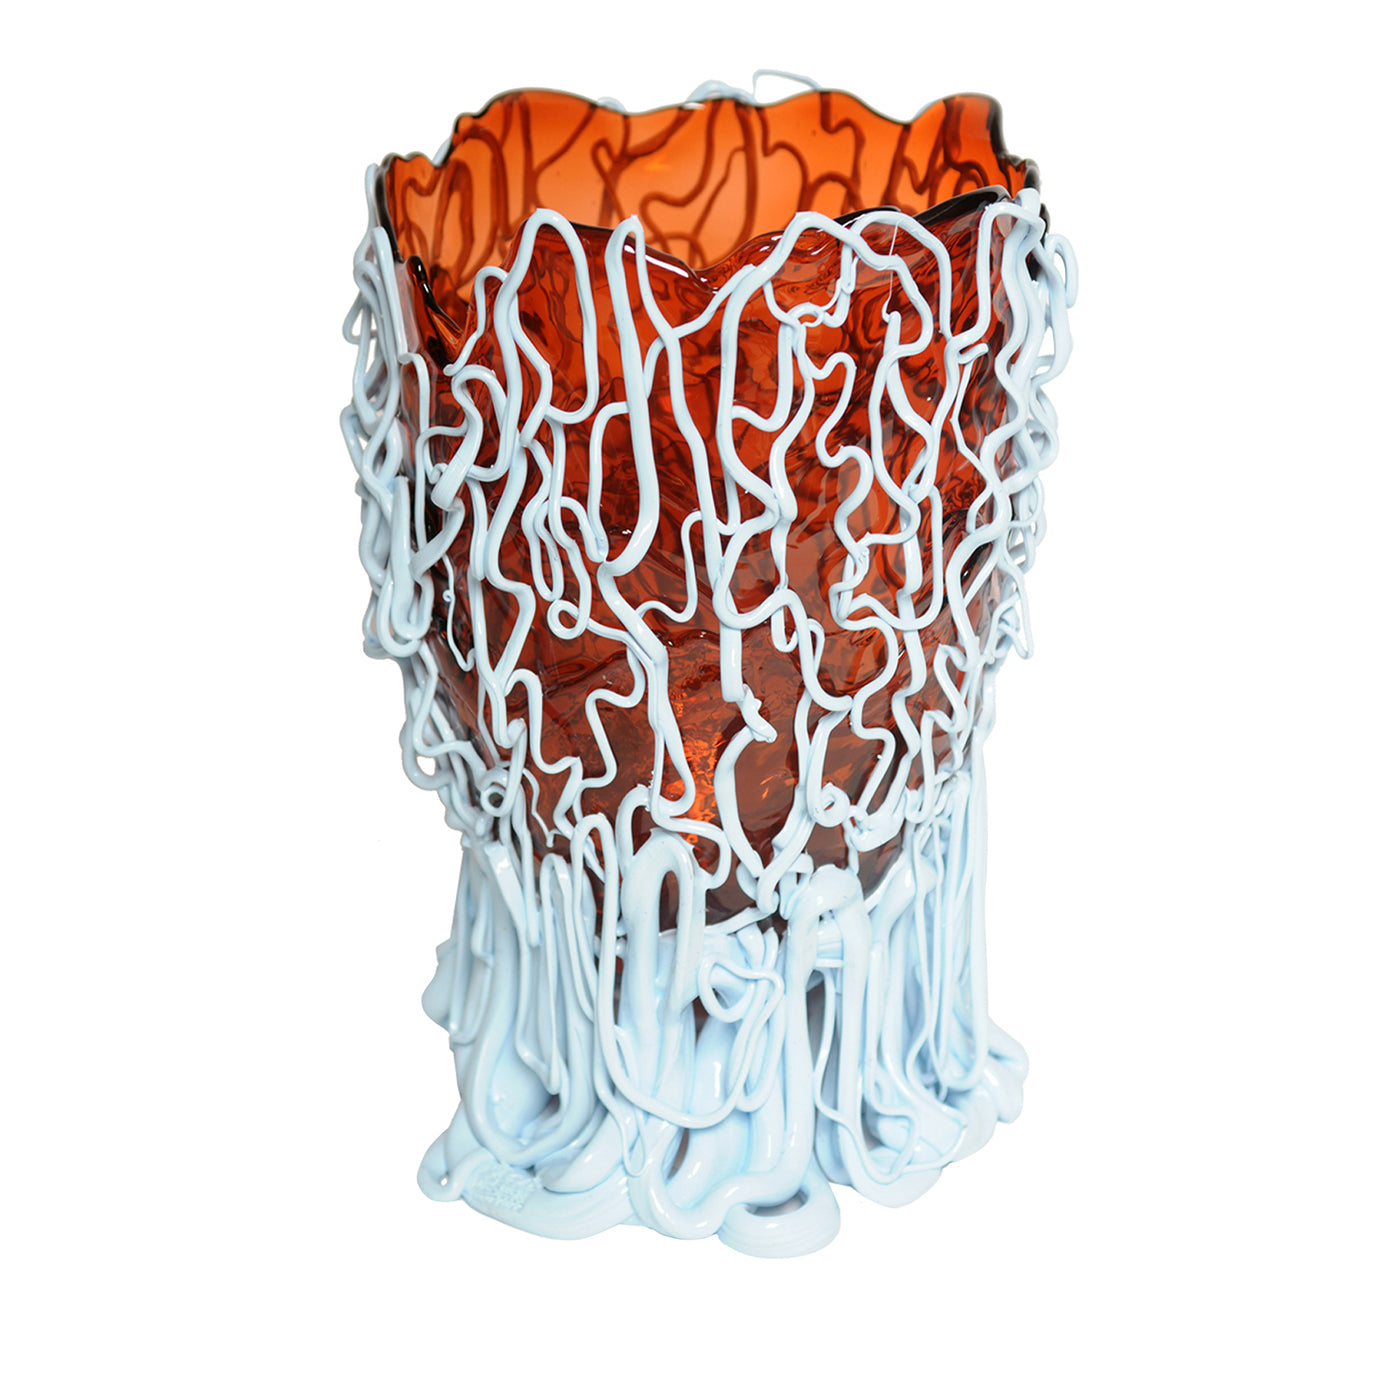 Medusa L Vase von Gaetano Pesce - Hauptansicht